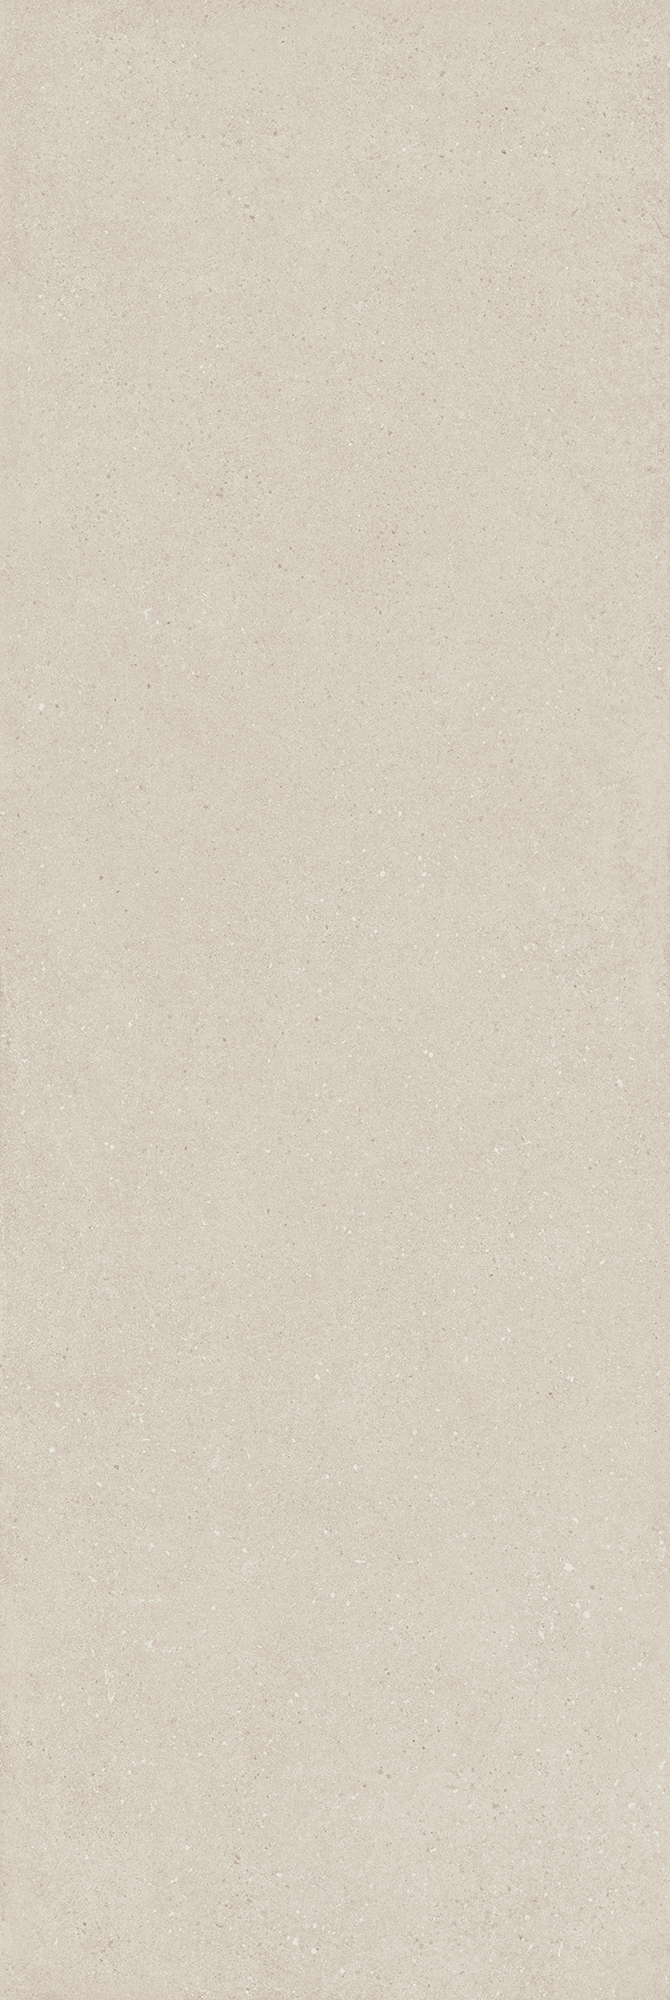 14045R Настенная Монсеррат Бежевая Светлая Матовая Обрезная - фото 3